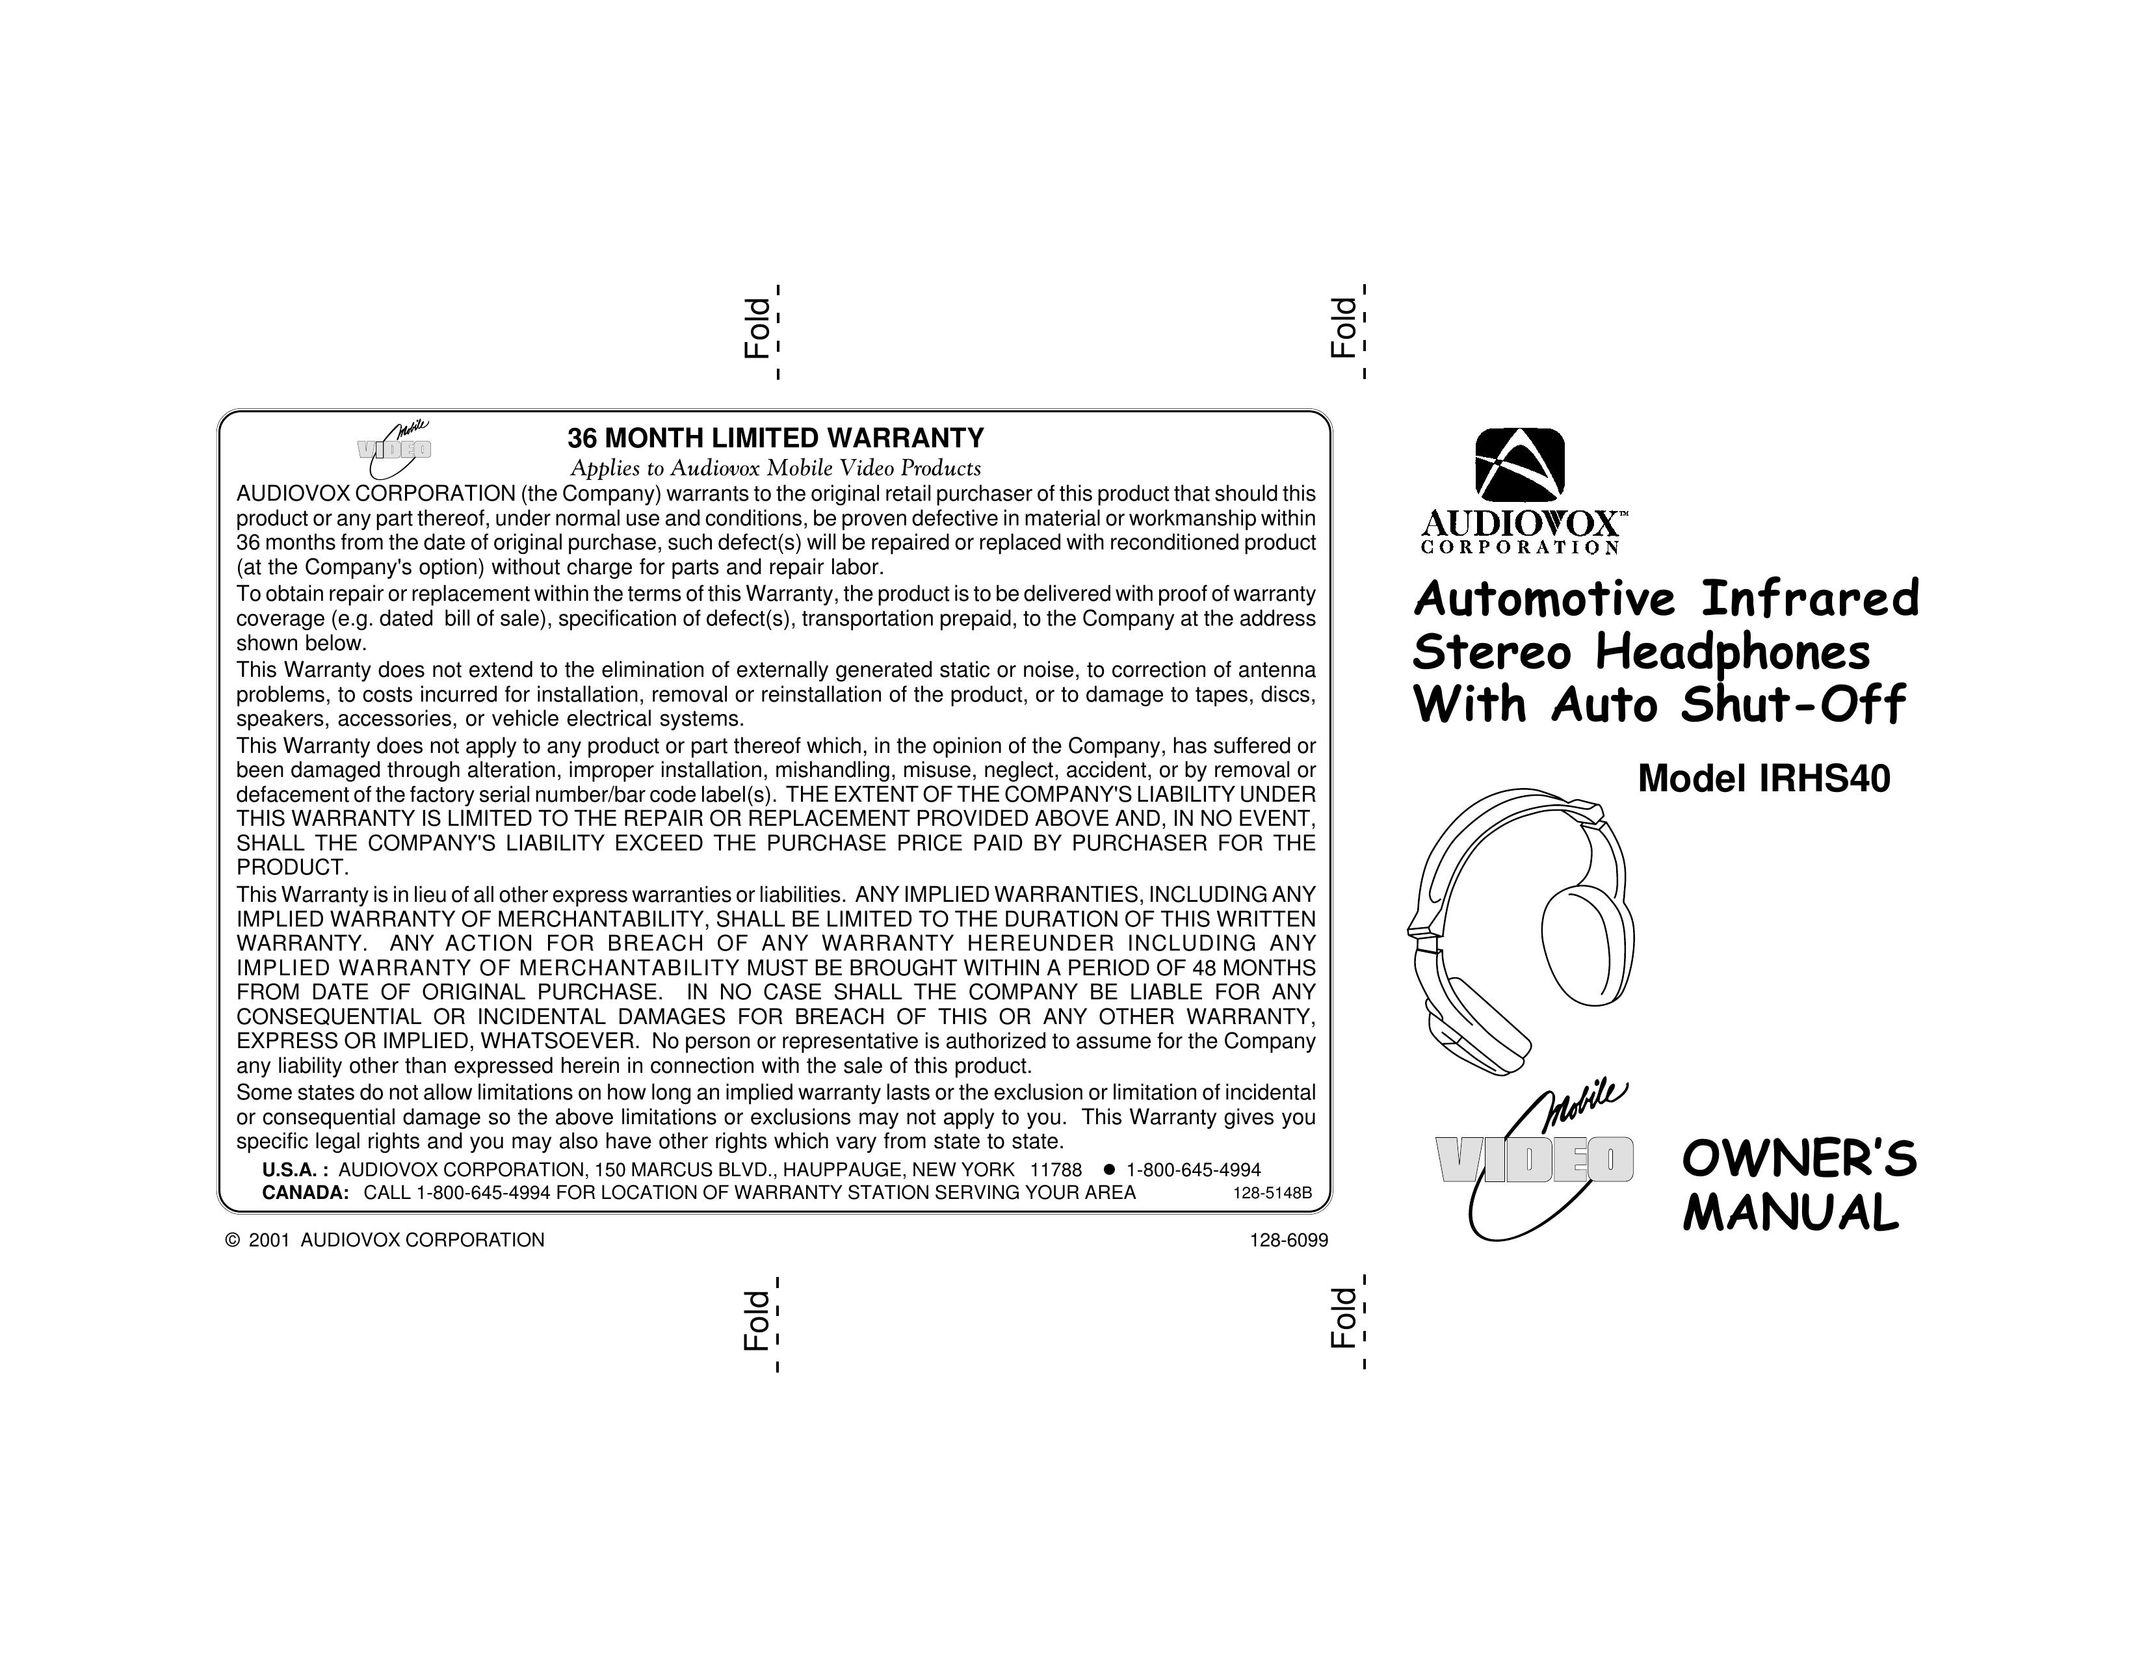 Audiovox IRHS40 Headphones User Manual